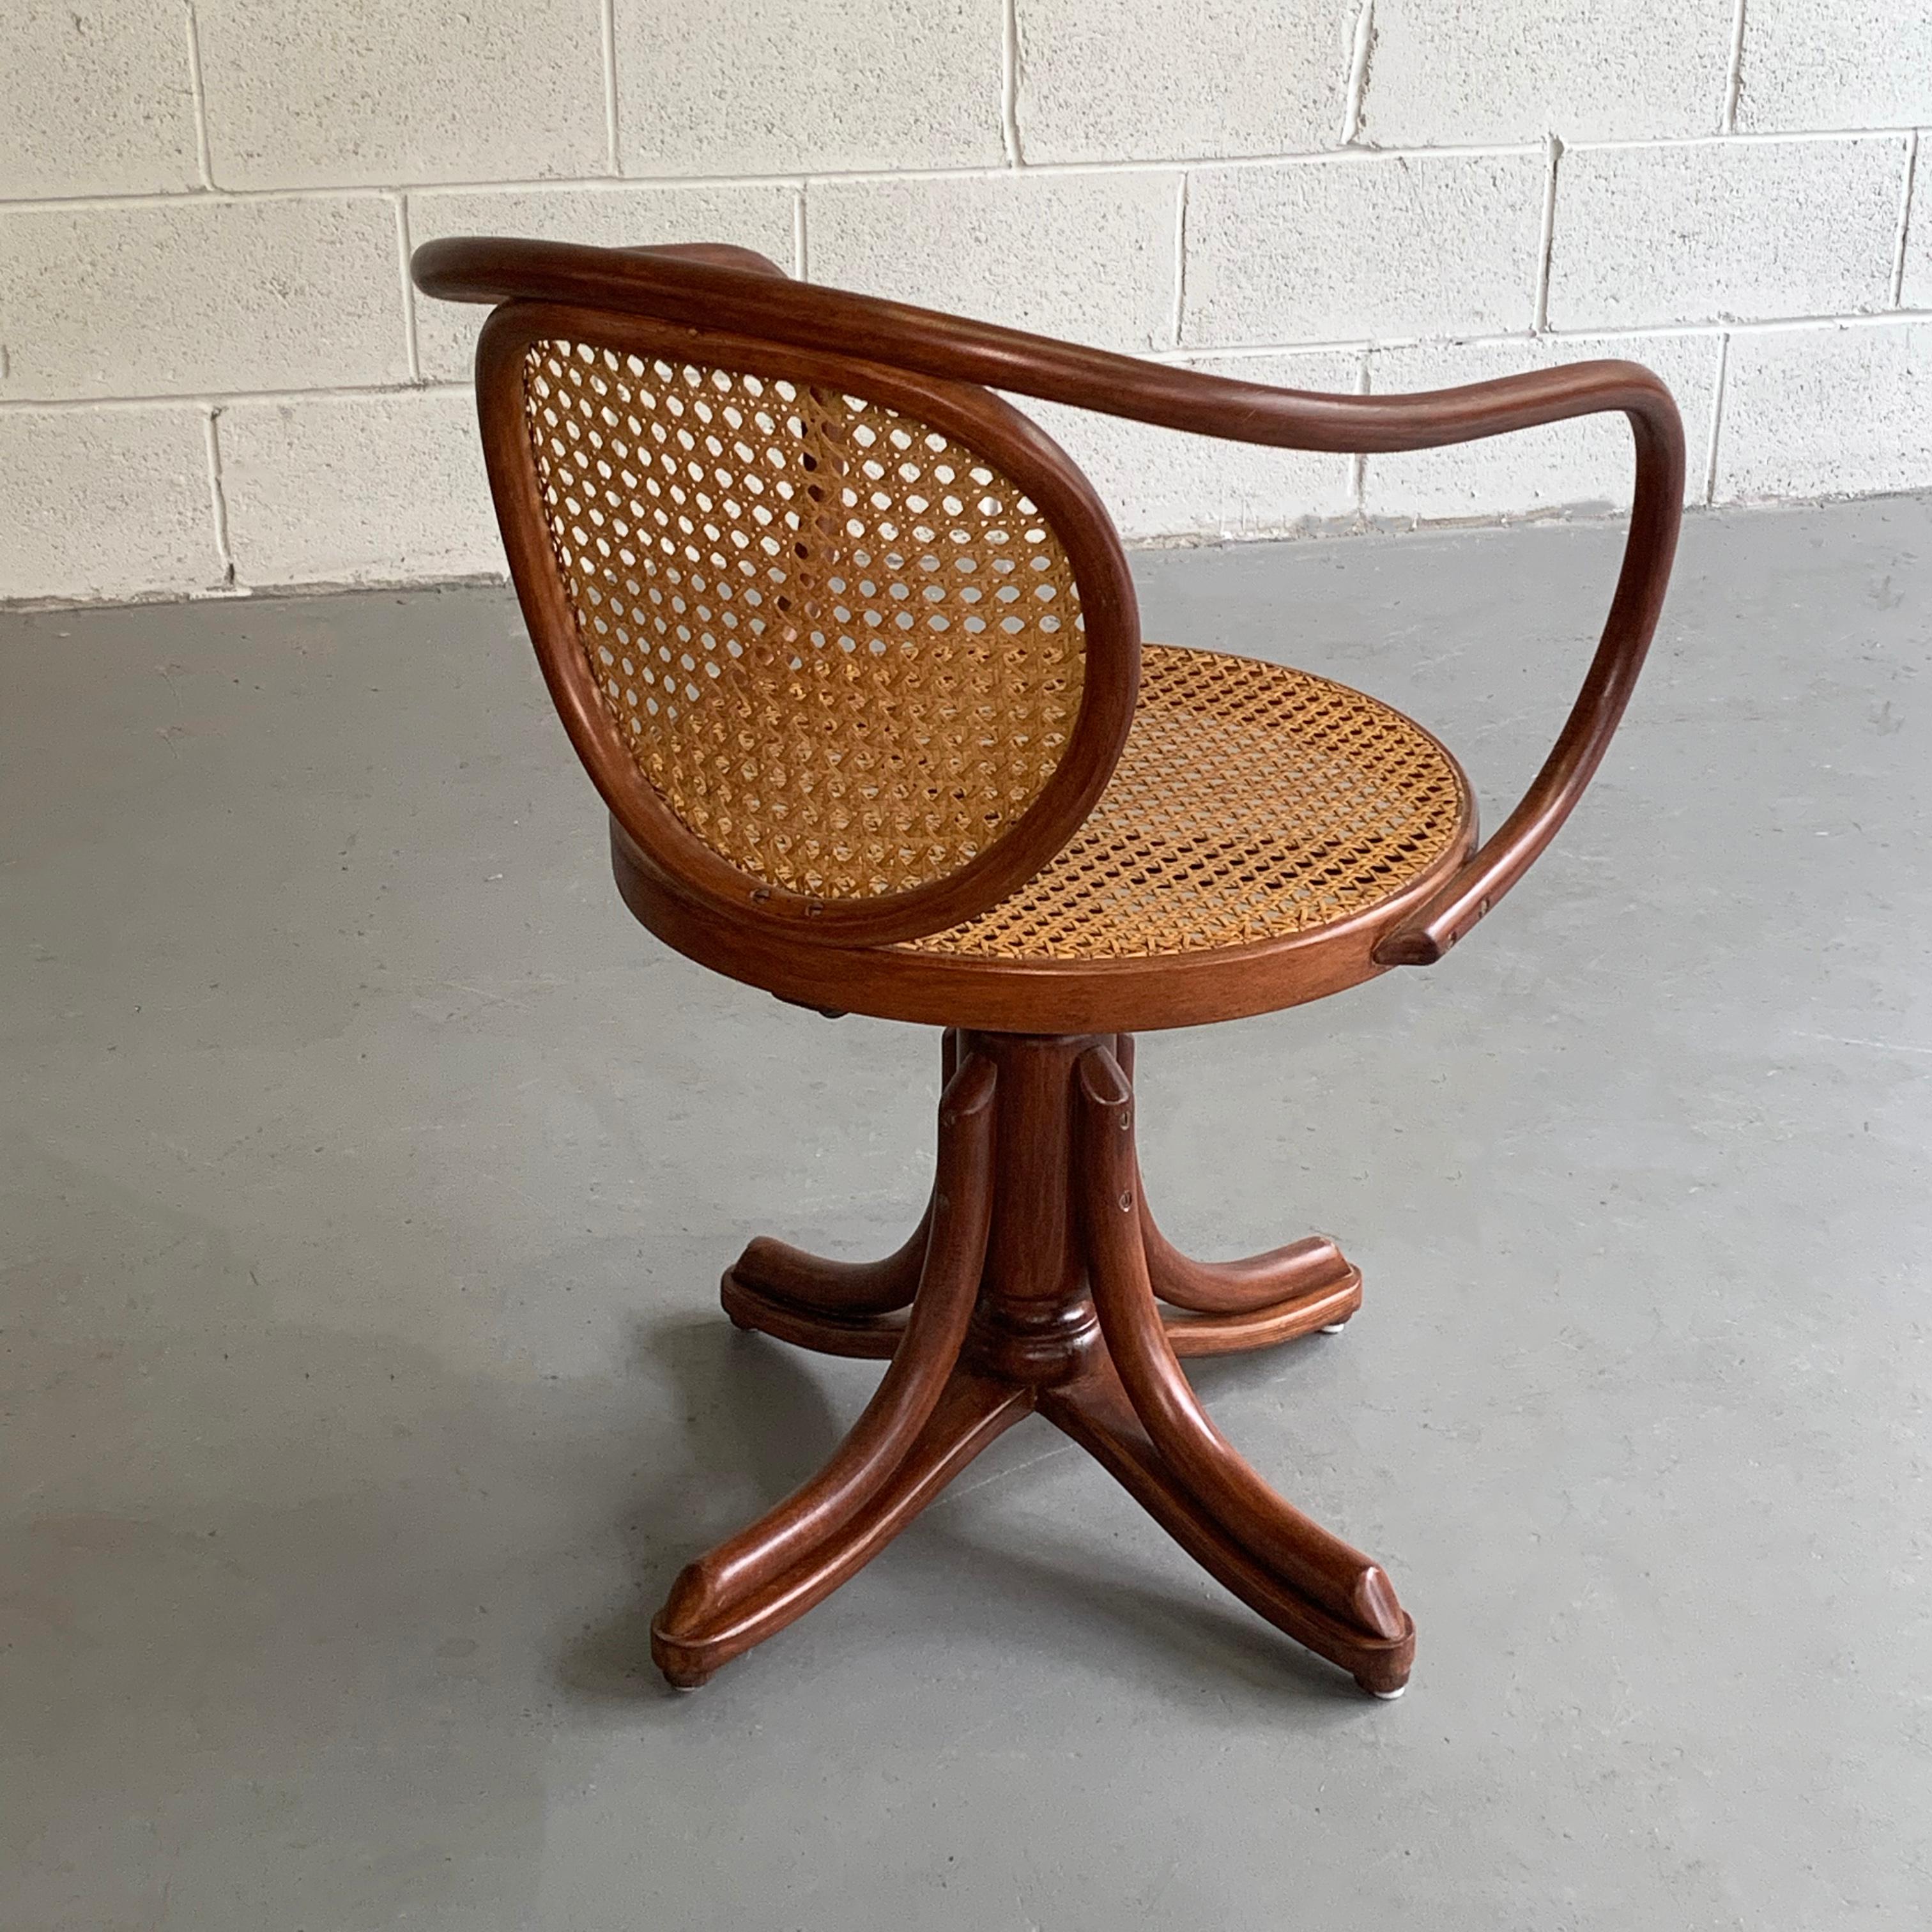 Art Nouveau Bentwood Rattan Swivel Chair, Model 5501 by Thonet for Zpm Radomsko